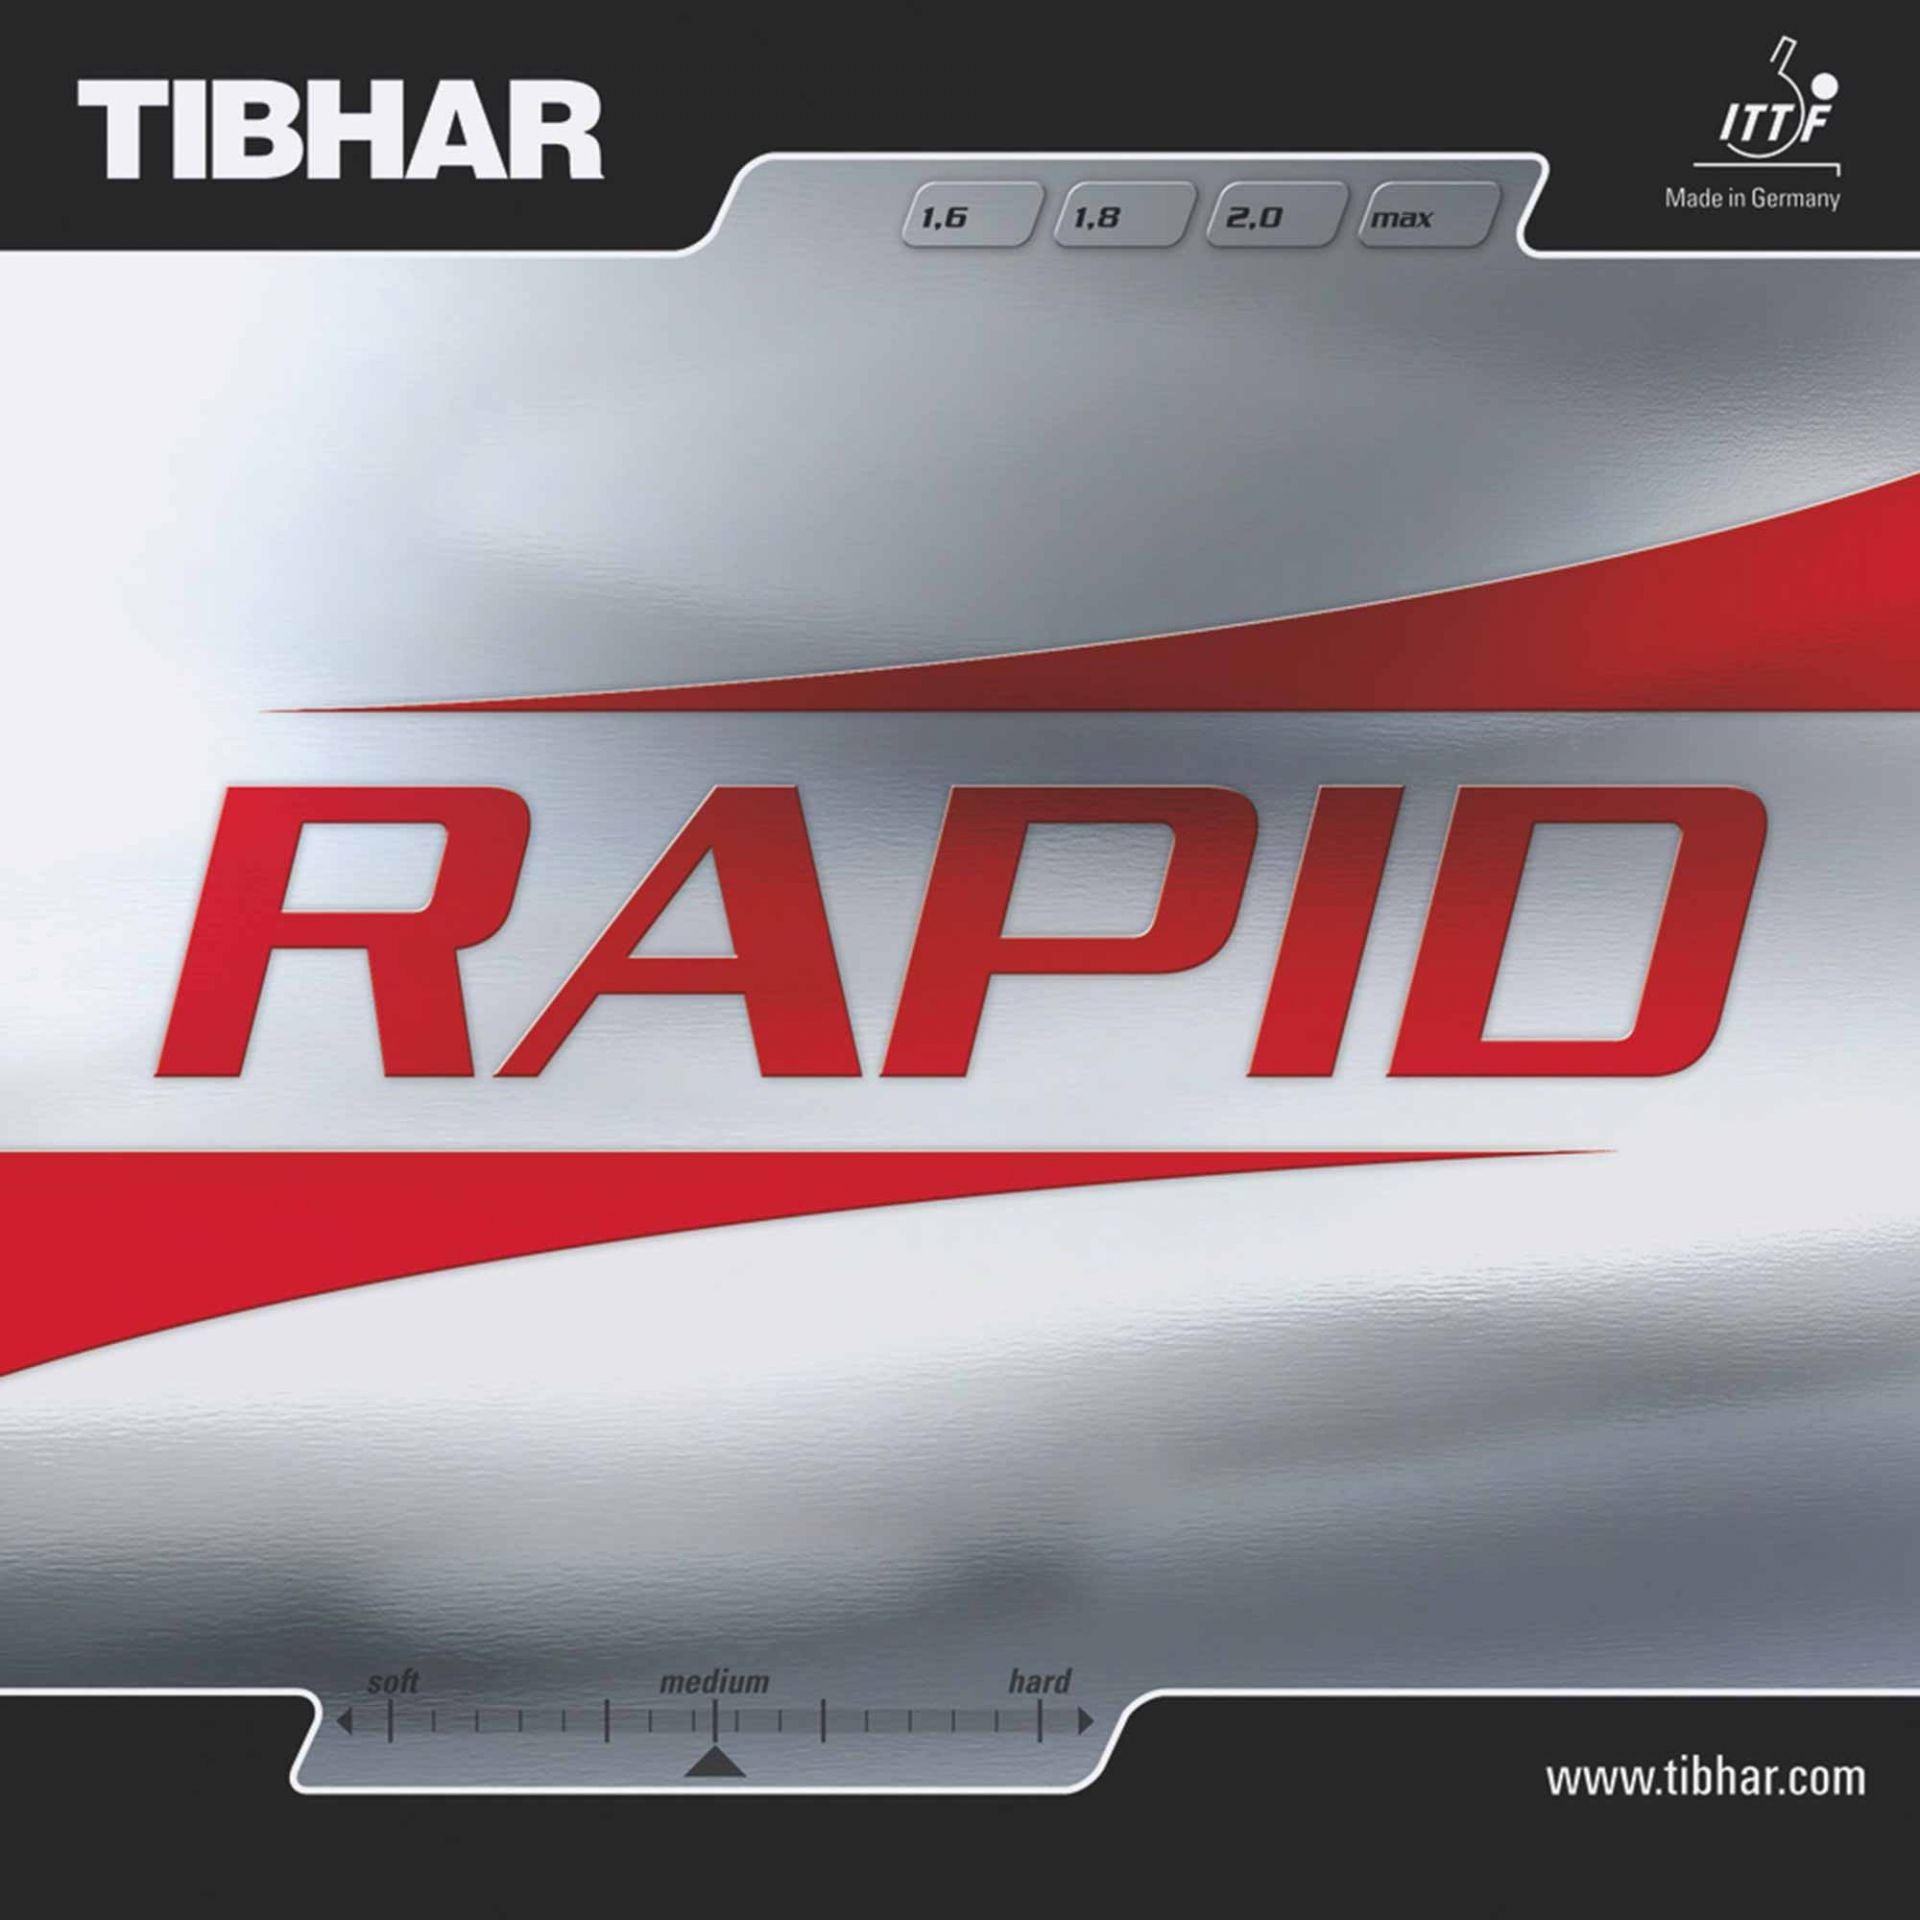 TIBHAR Rapid - Table Tennis Rubber